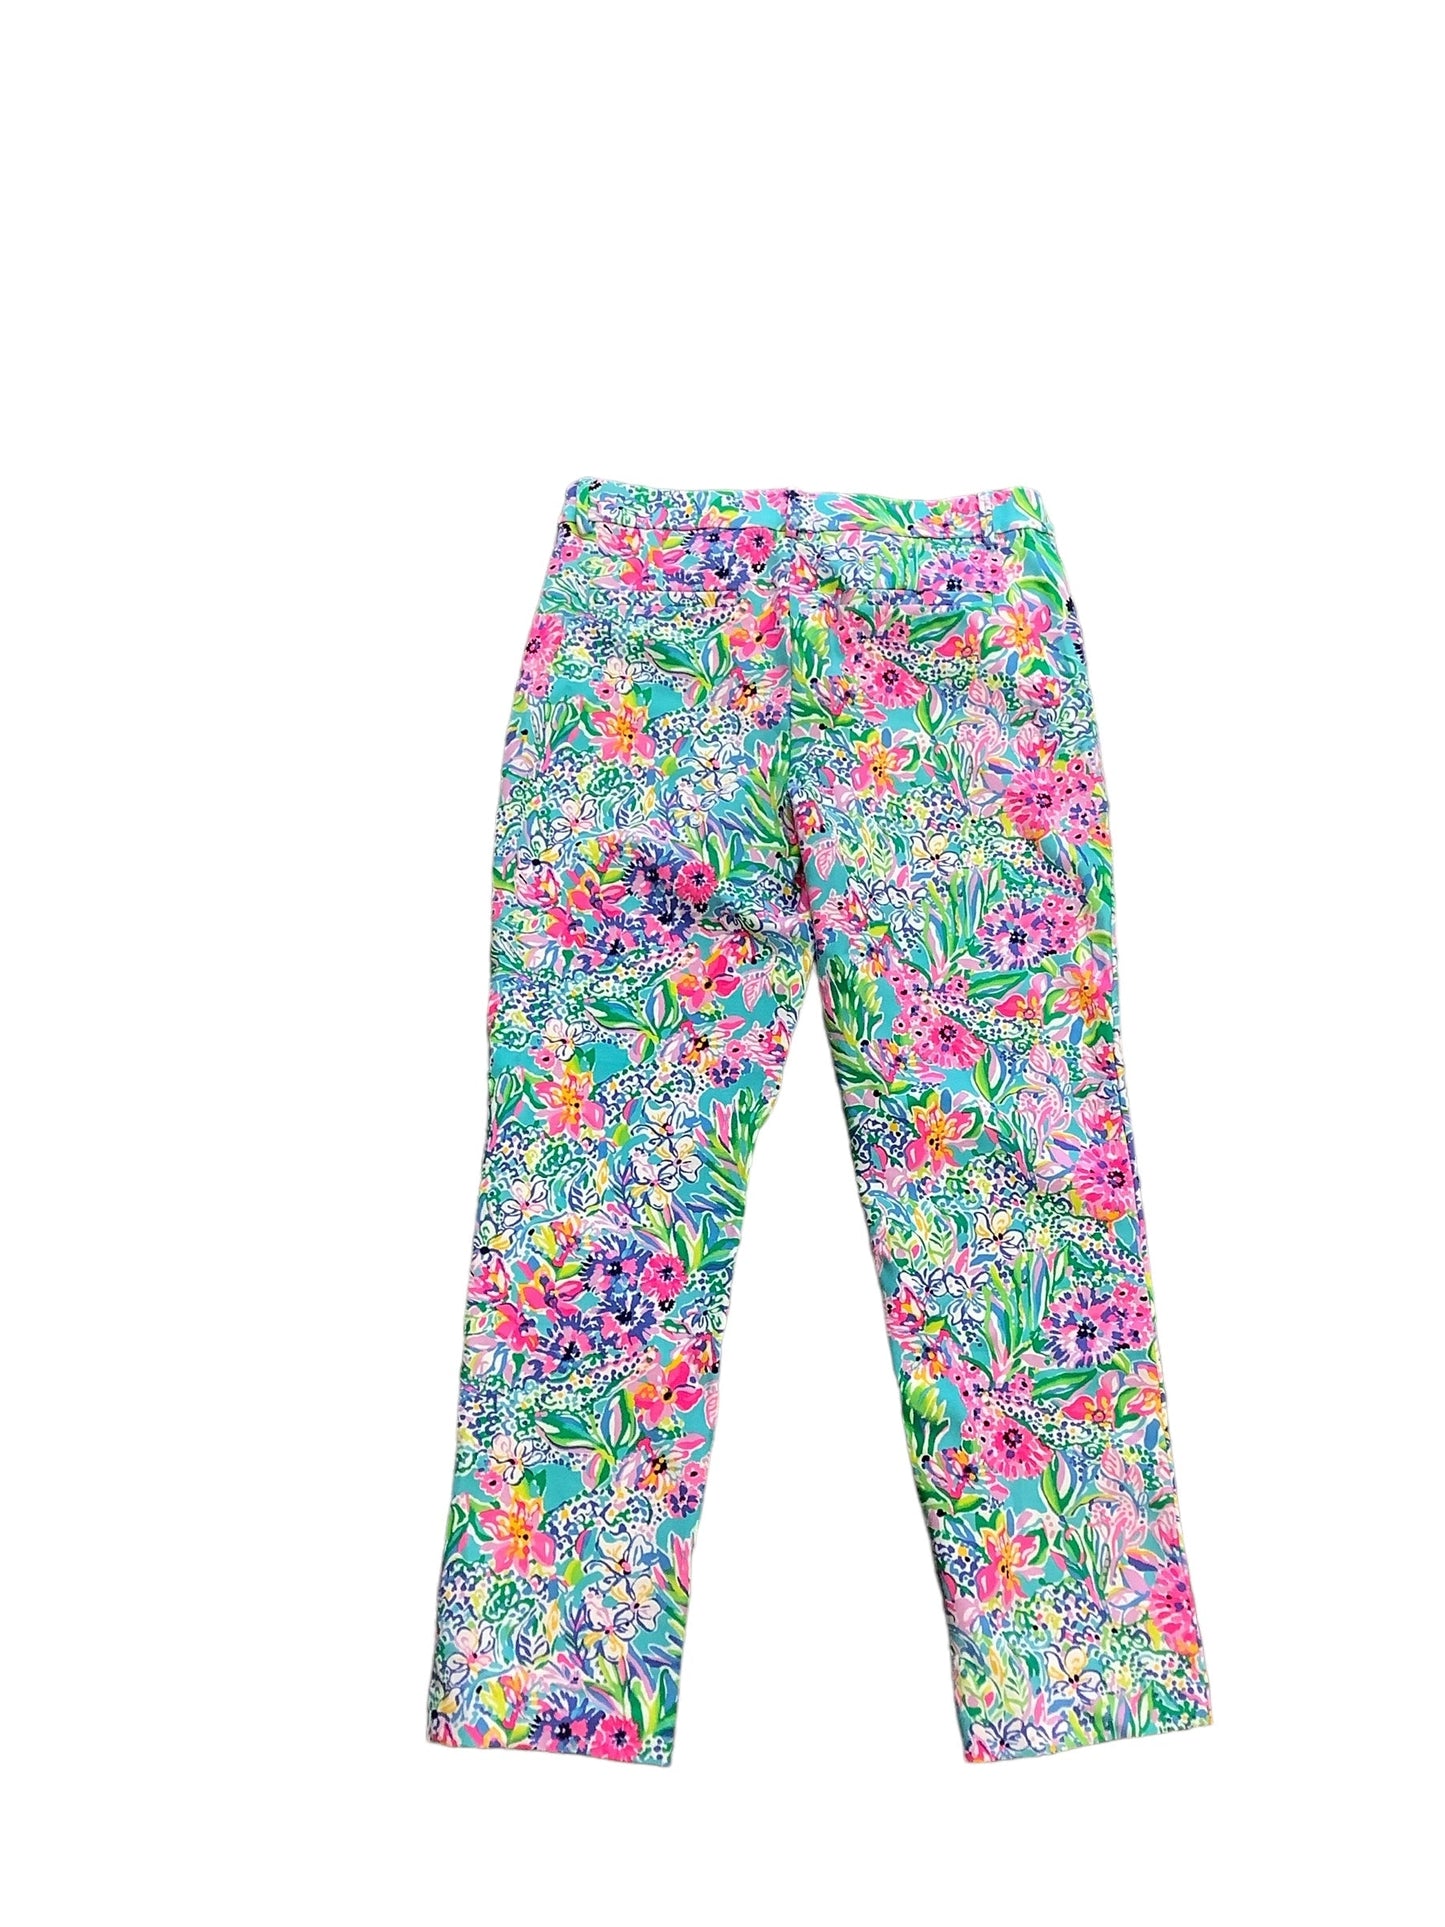 Floral Print Pants Designer Lilly Pulitzer, Size 8